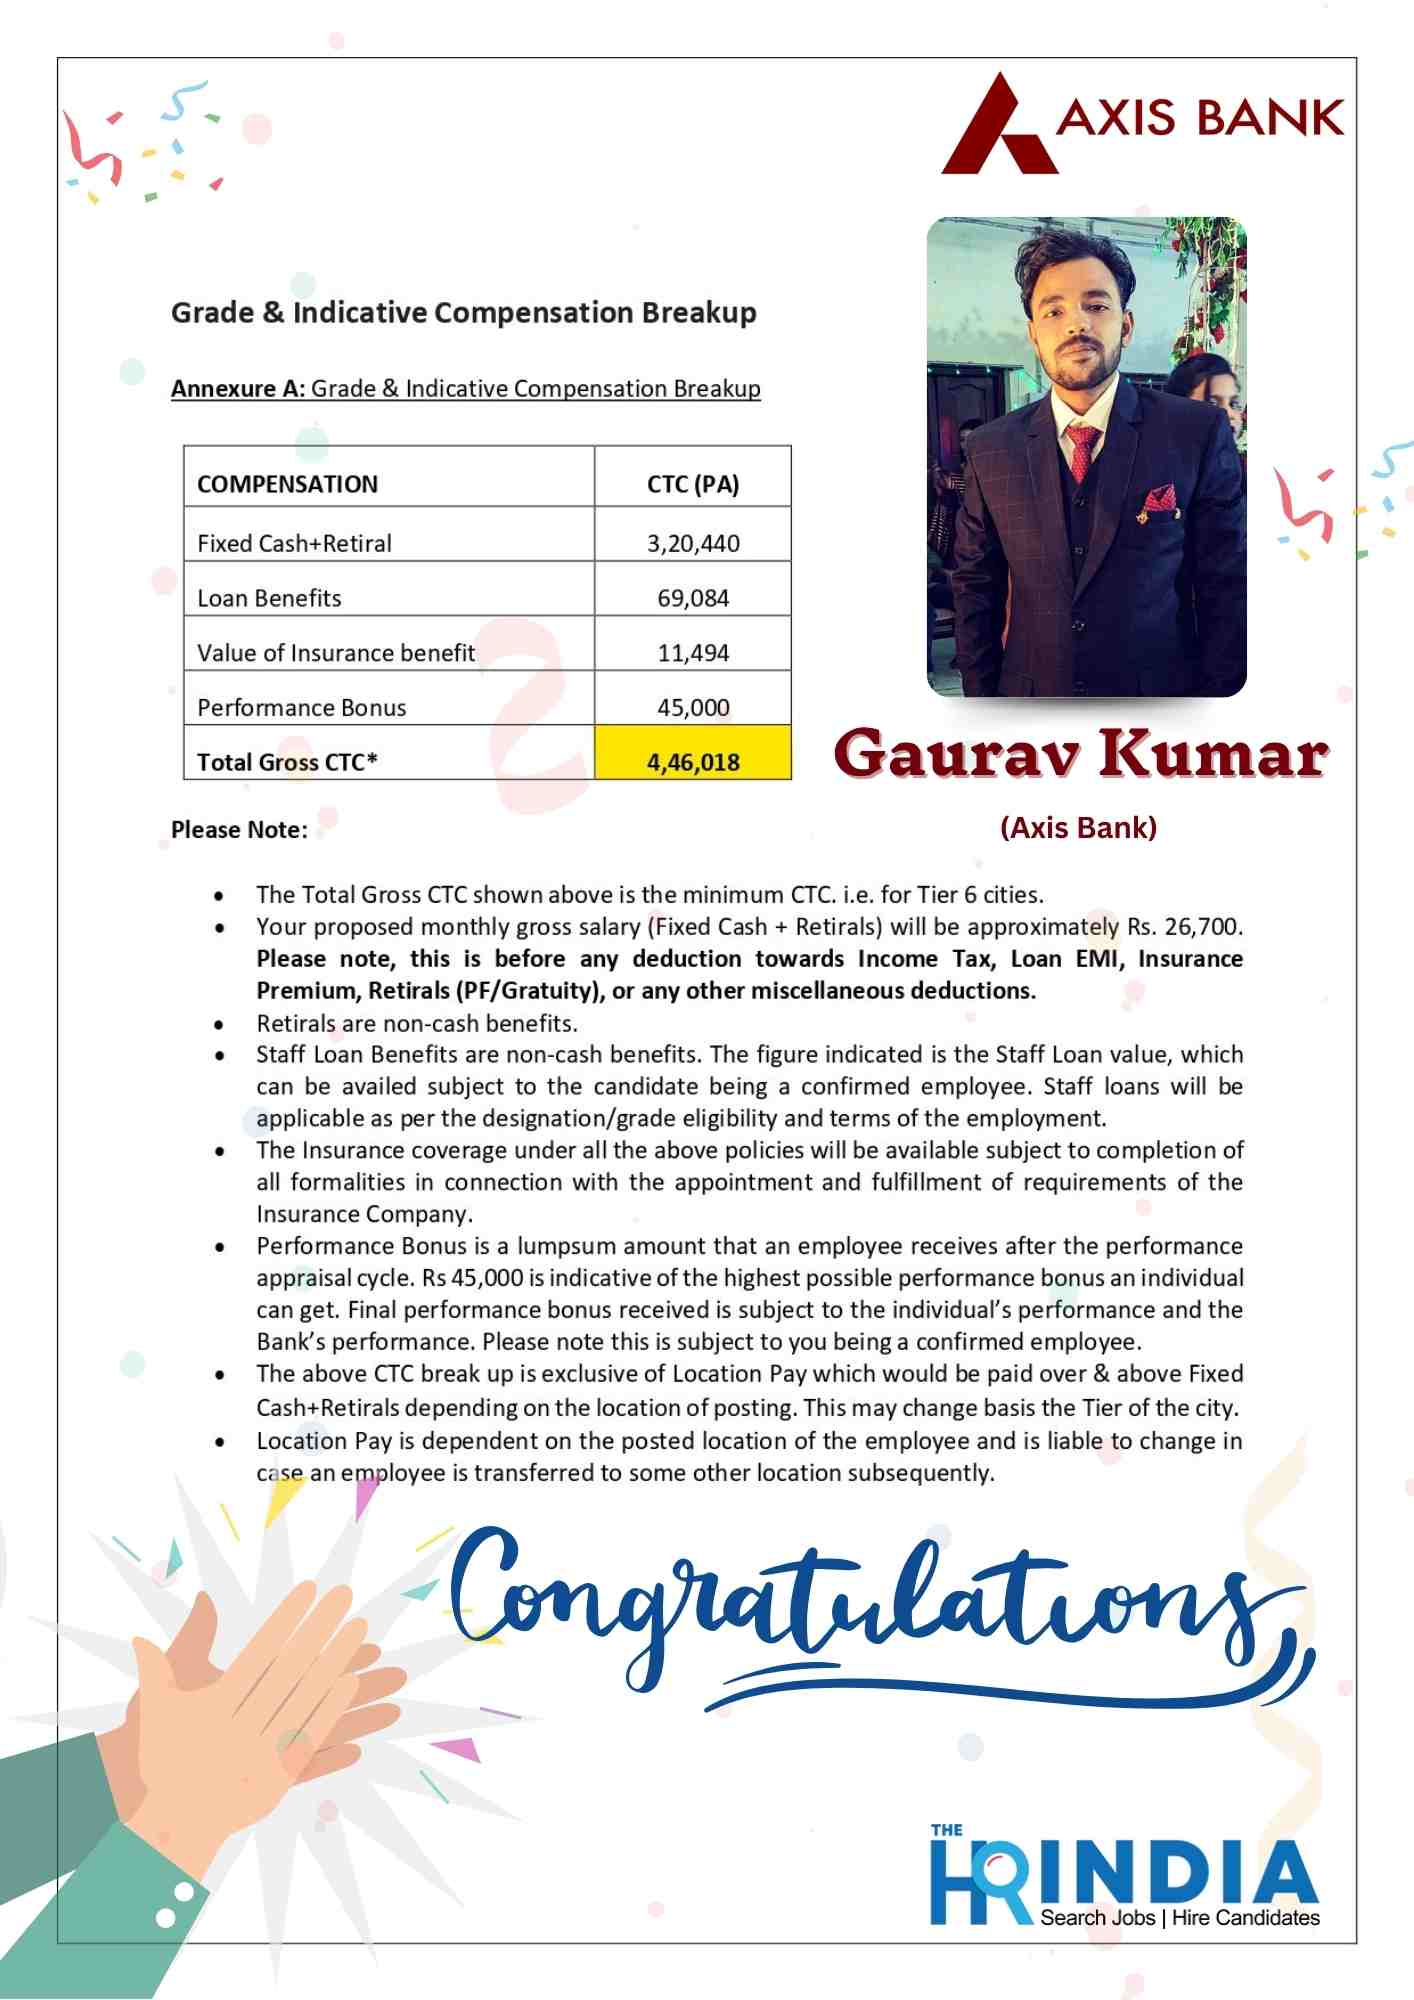 Gaurav Kumar  | The HR India